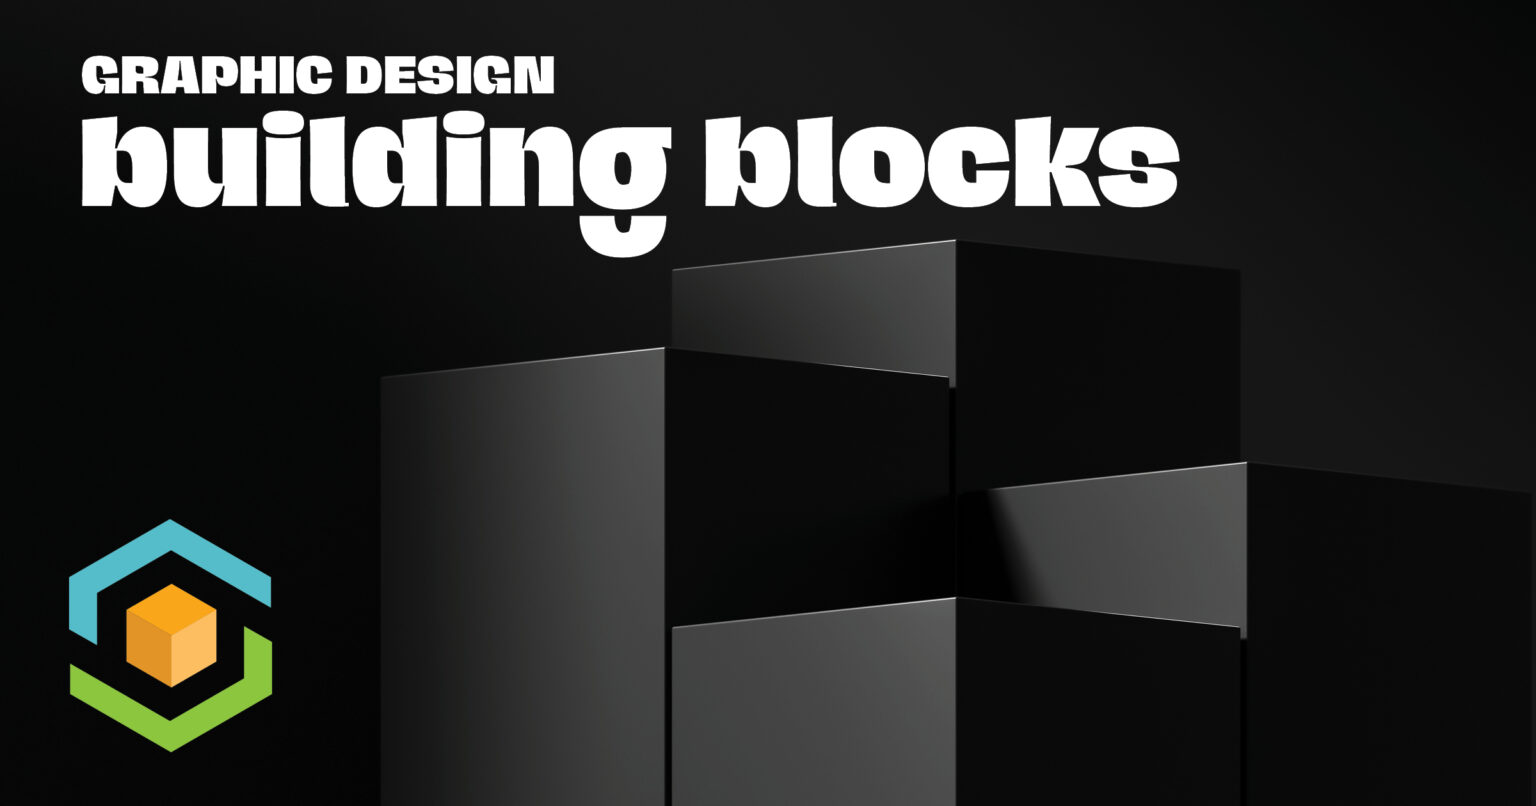 Granite Bay Graphic Design Building Blocks Main Introduction Graphic